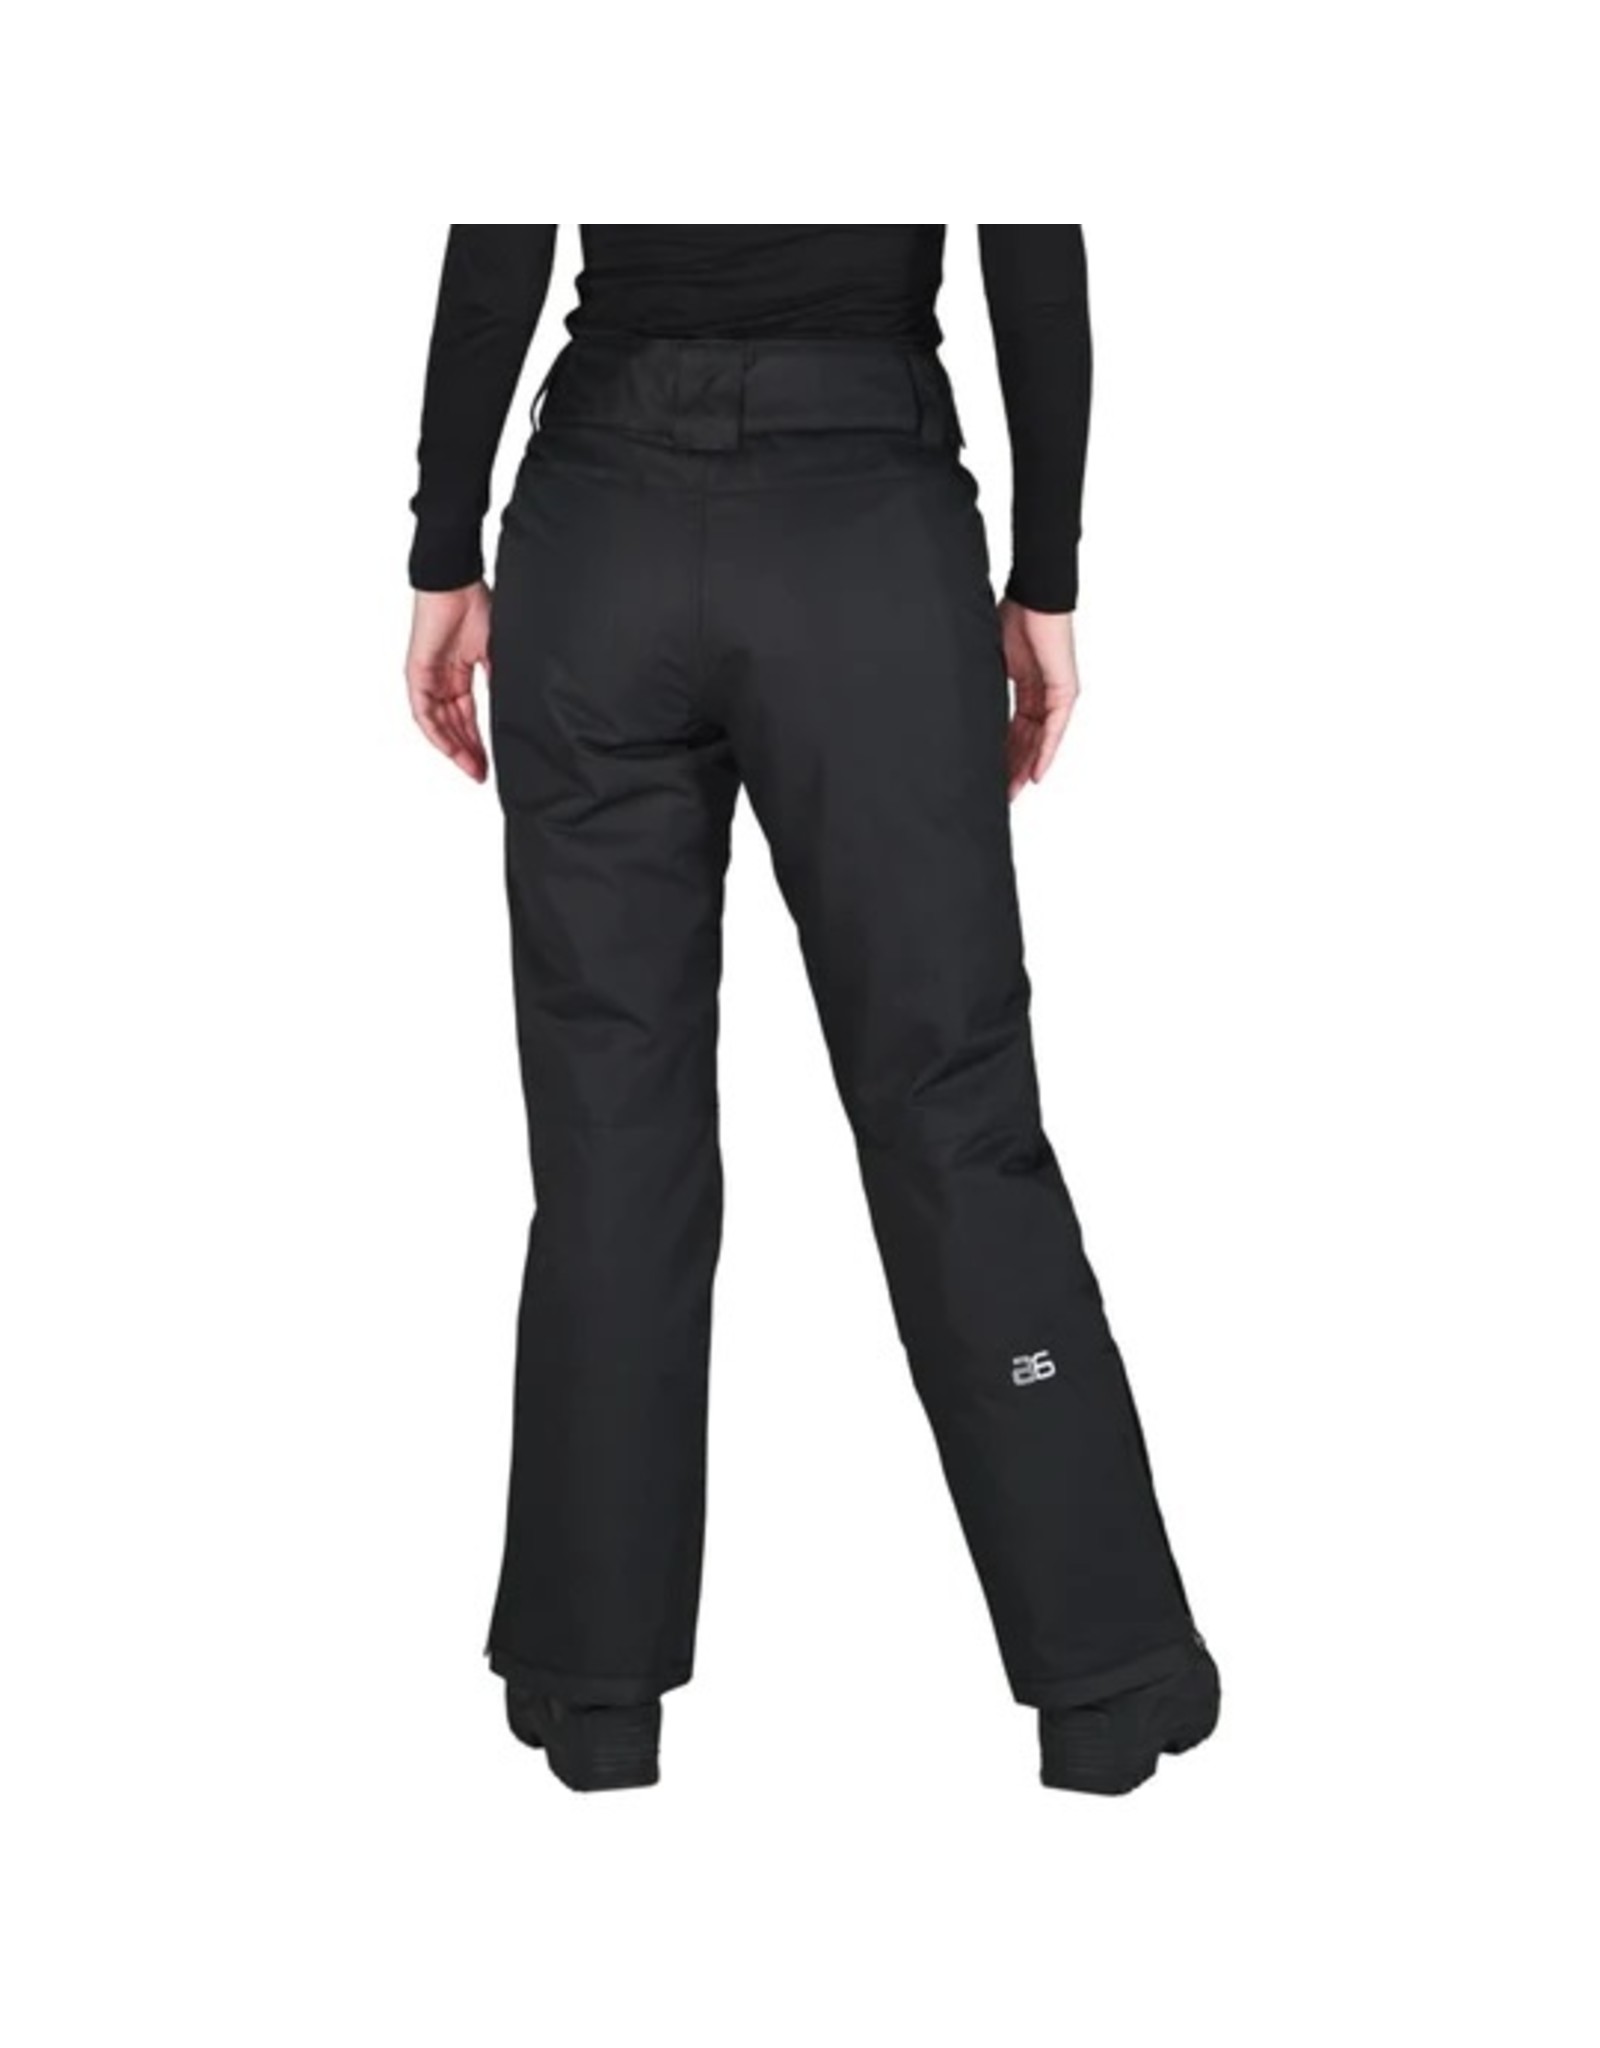 Ski Gear by Arctix Women's Essential Snow Bib Overall Pant